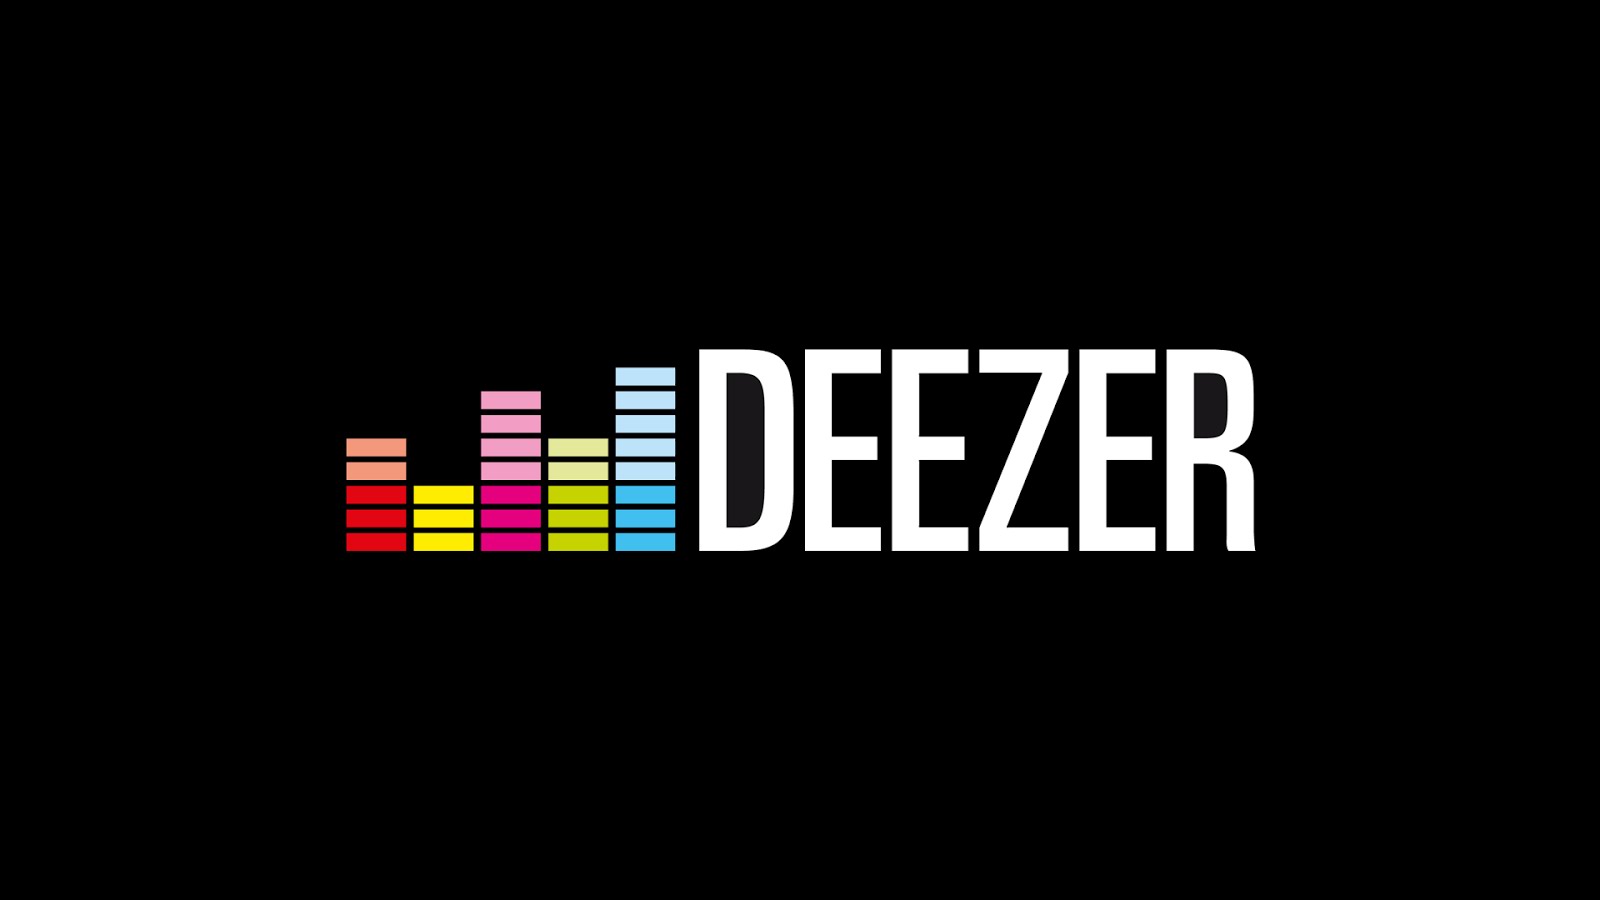 DEEZER (Streaming Portal)